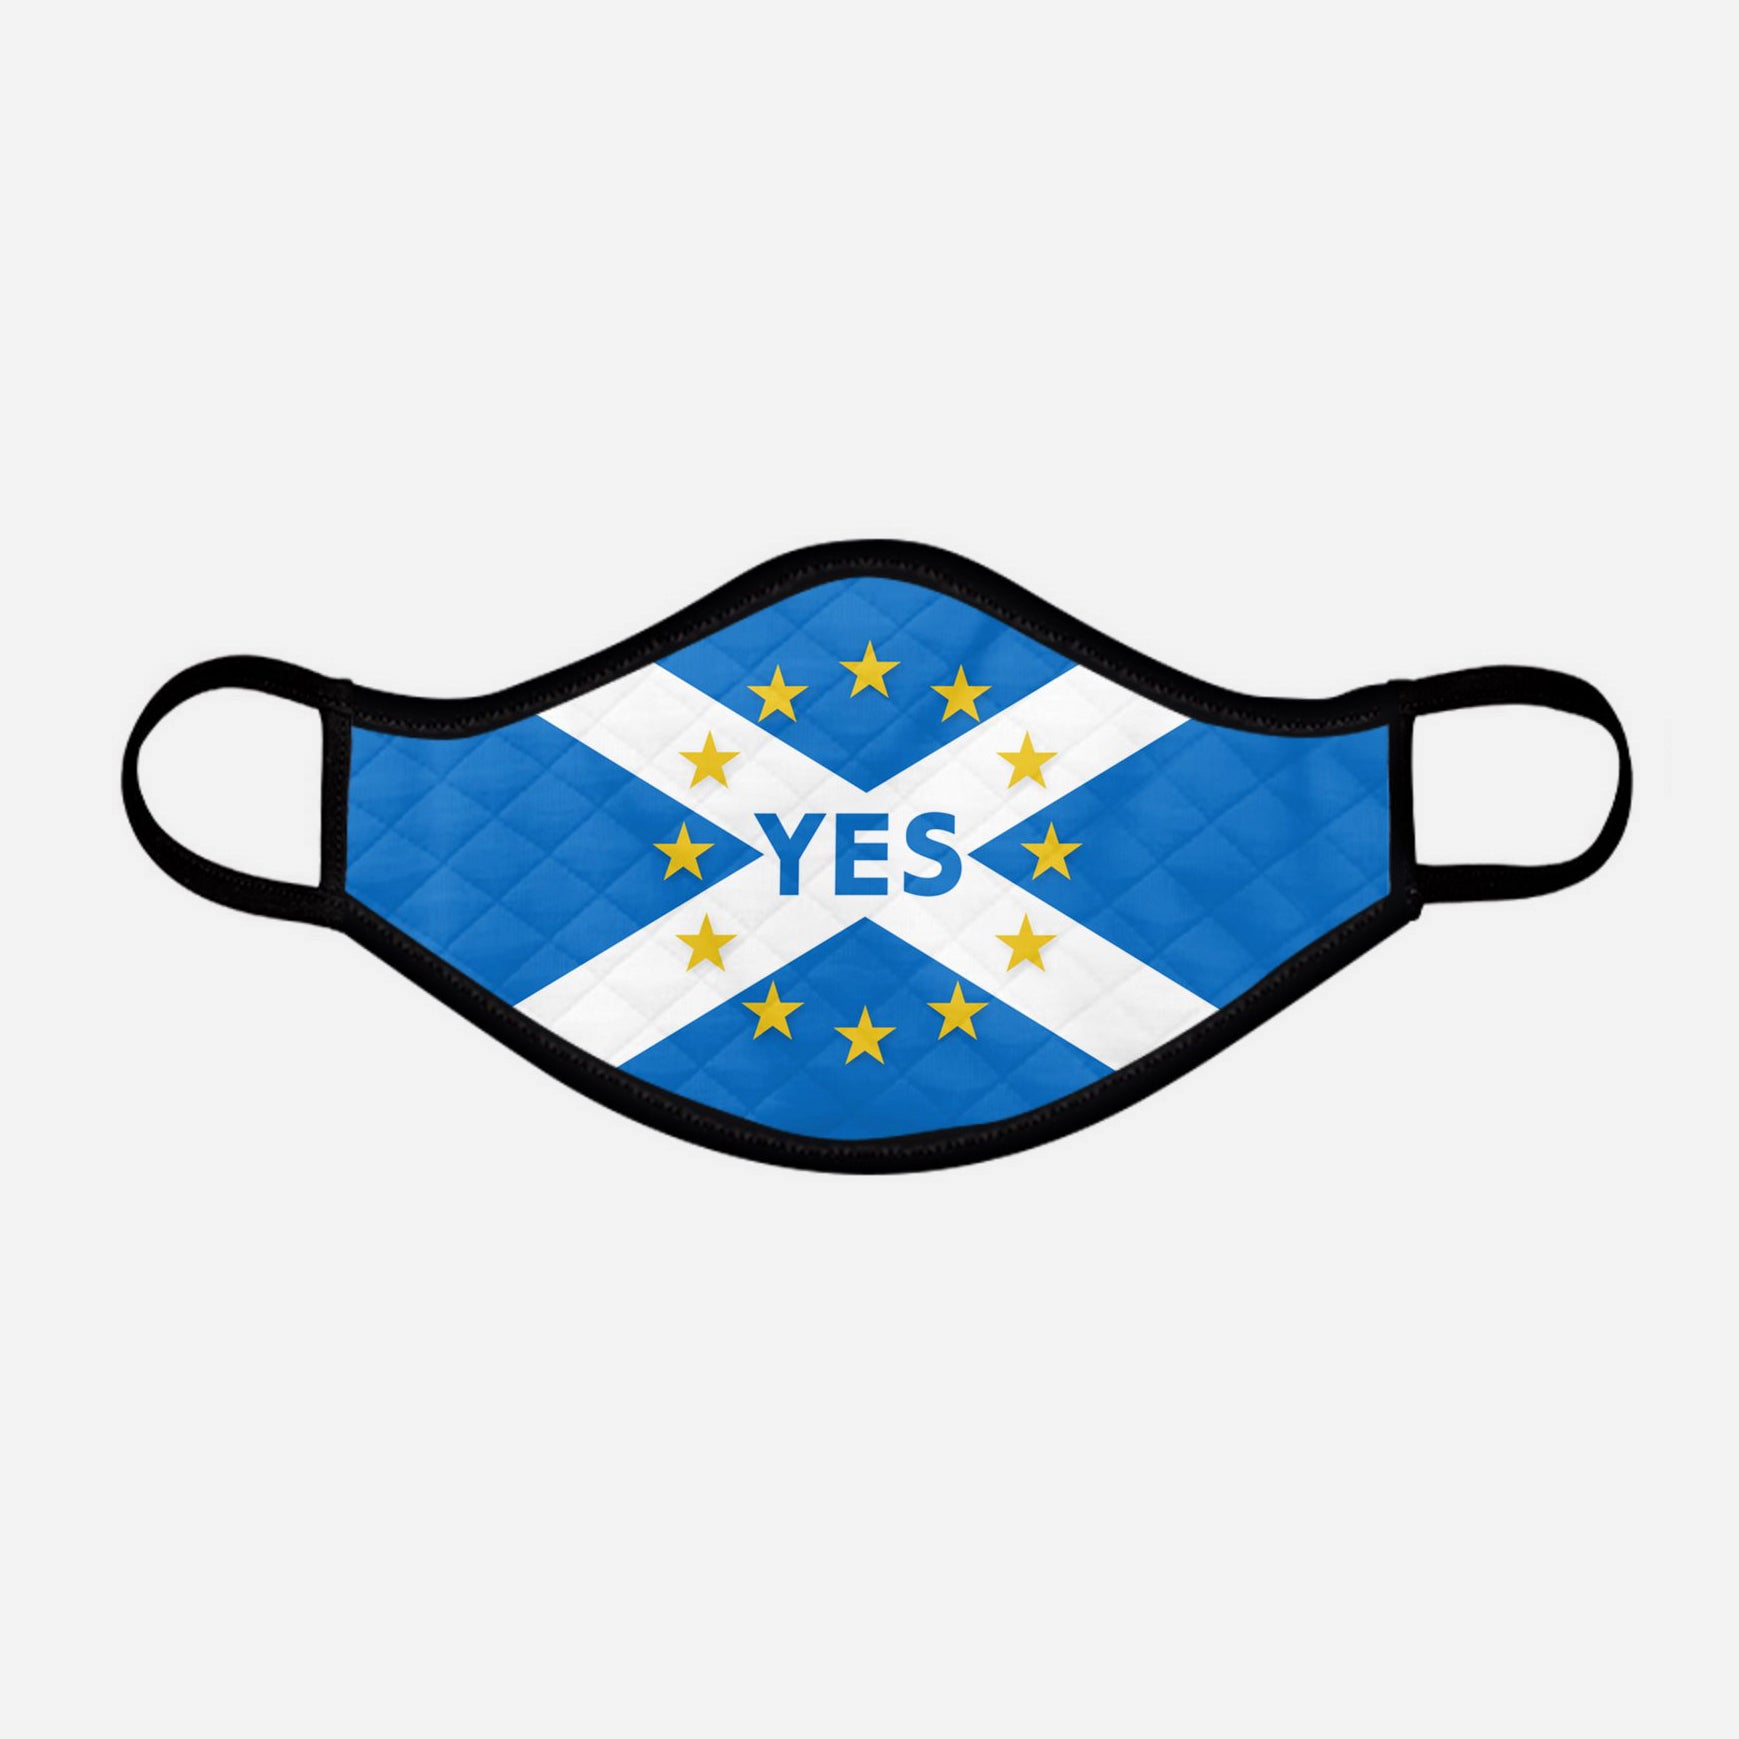 YES IT'S TIME - Alba Gu Brath - Pro EU - European Union - Nicola Sturgeon - Scottish Saltire face mask cloth covering - Nicola Sturgeon - by Steven Patrick Sim the Tartan Artisan - Stevie Tartan Guy - medium